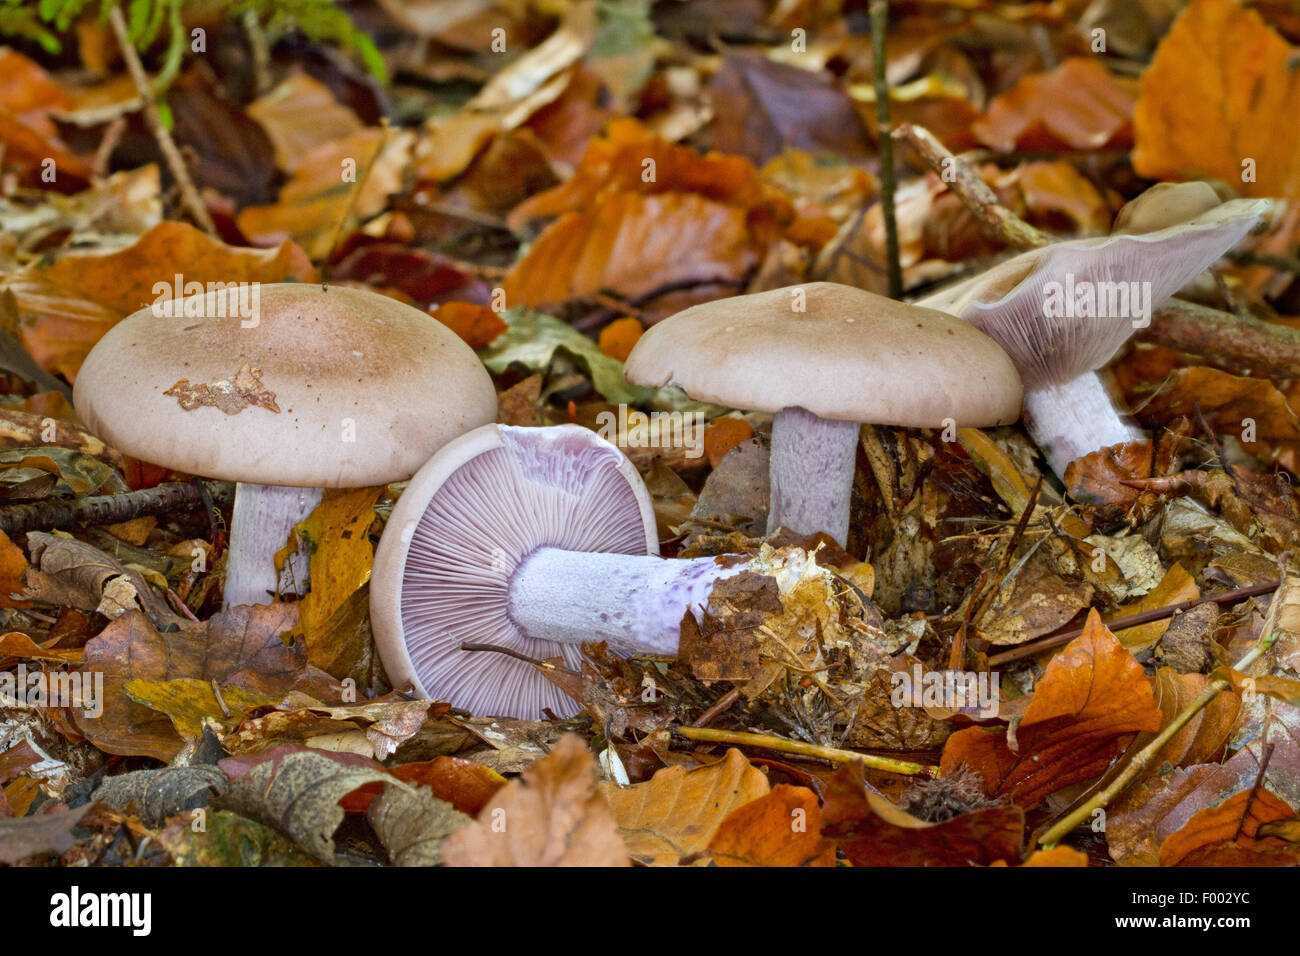 Wood blewit, Blue stalk mushroom, Wood Blewit mushroom (Lepista nuda, Clitocybe nuda, Tricholoma nudum), fruiting bodies on forest ground, edible mushrooms, Germany, Mecklenburg-Western Pomerania Stock Photo